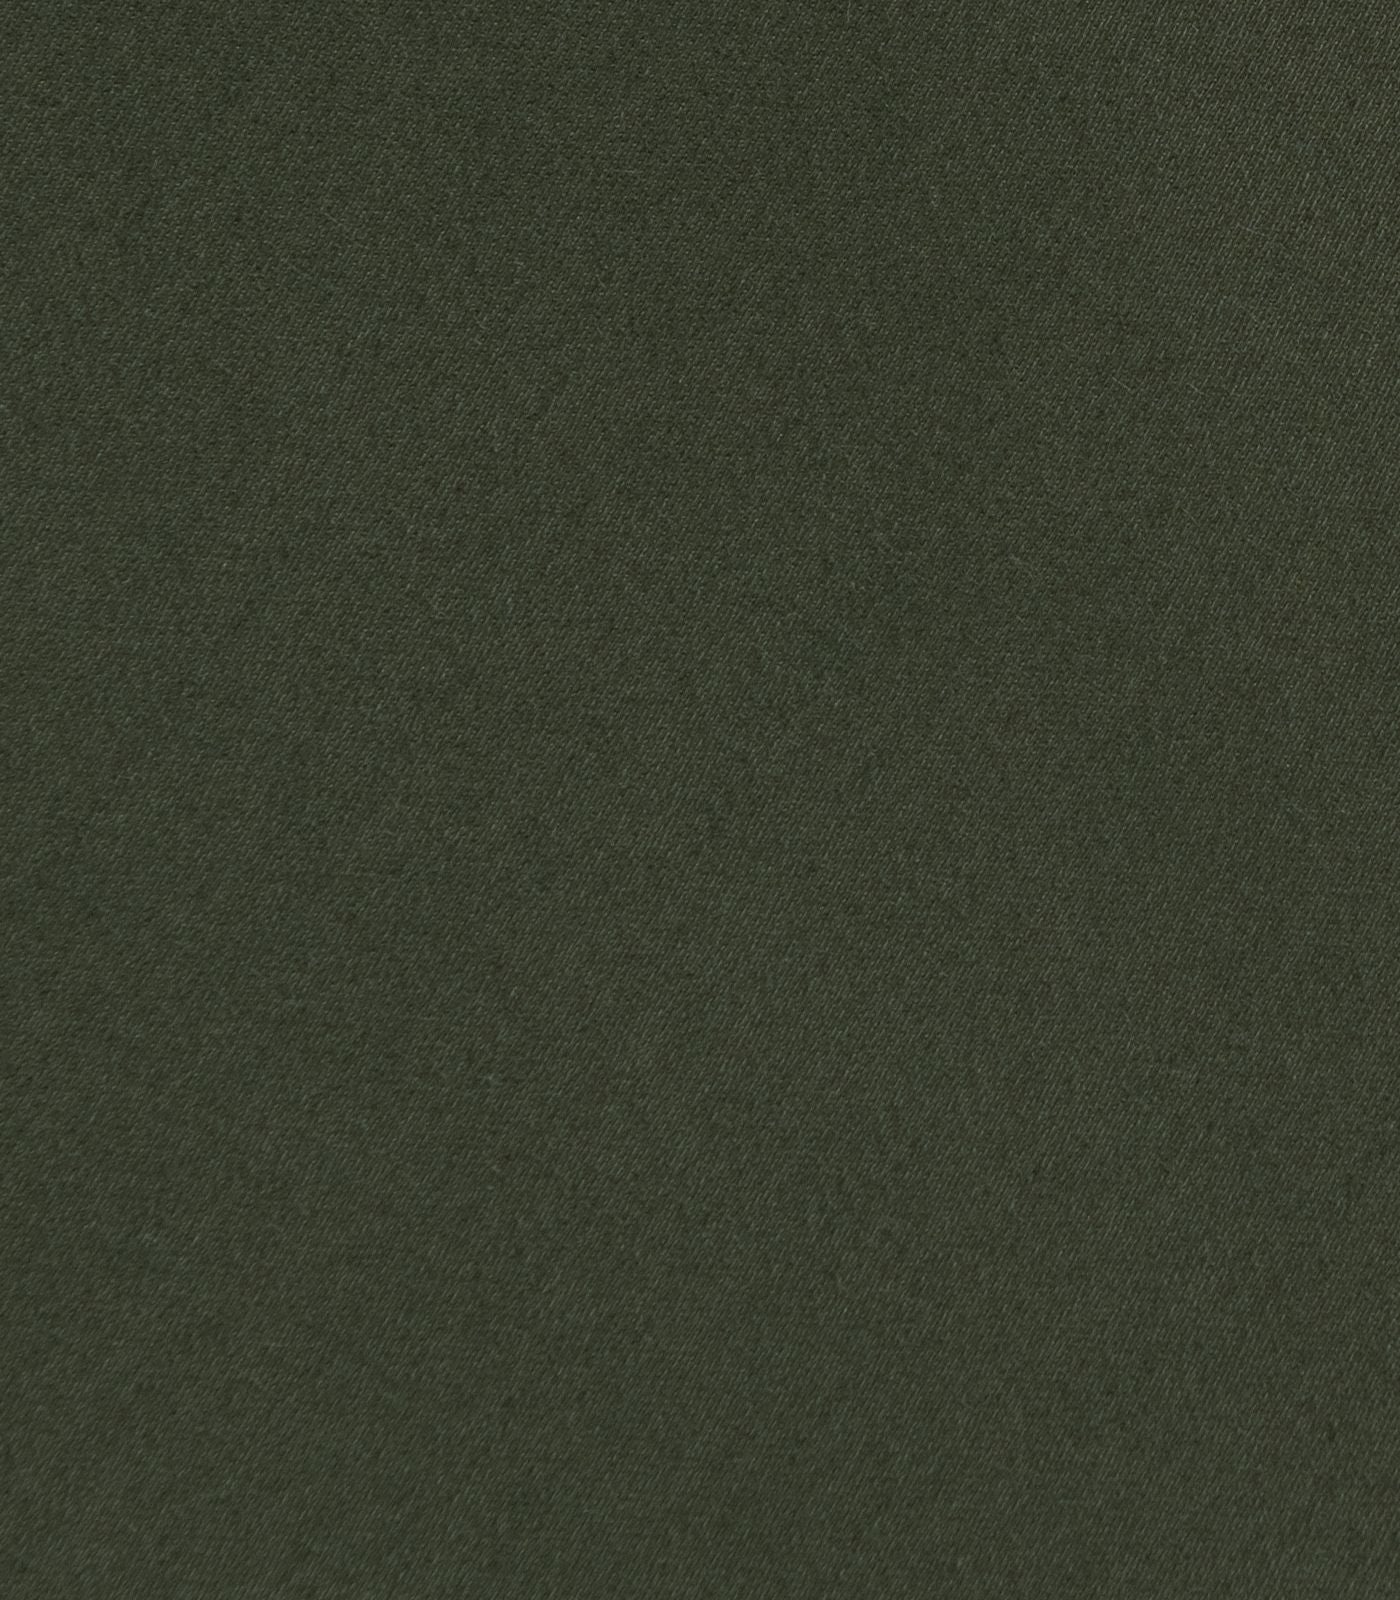 Bhumi Organic Cotton - Flat - Sateen Sheet - Bronze Green